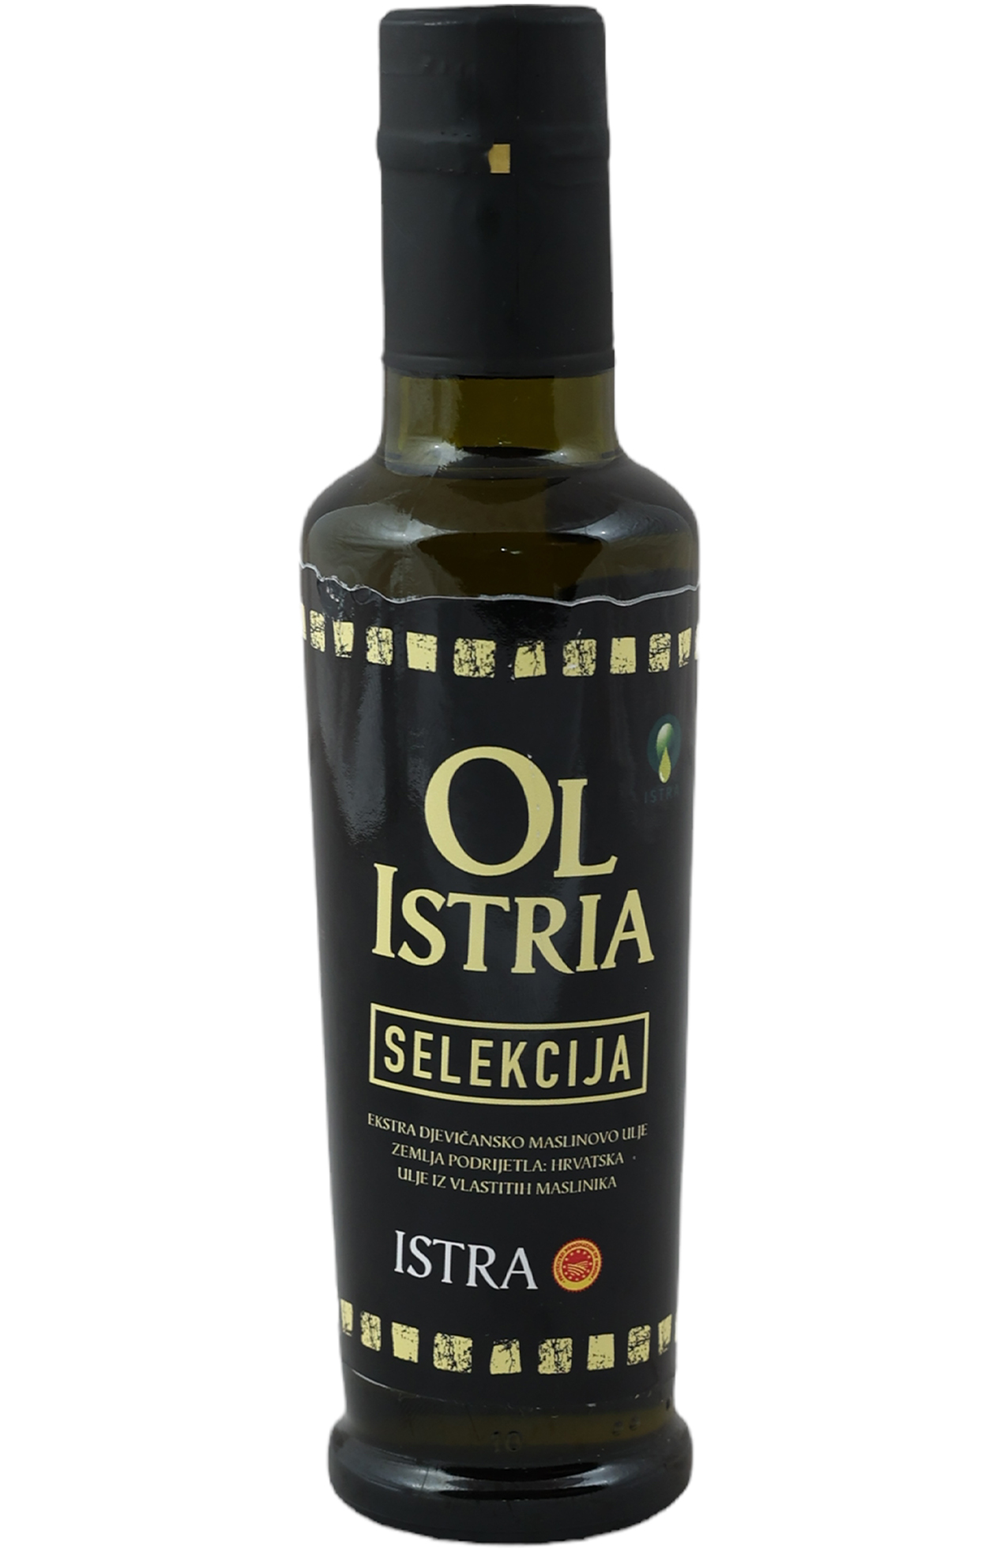 Ol Istria Selection